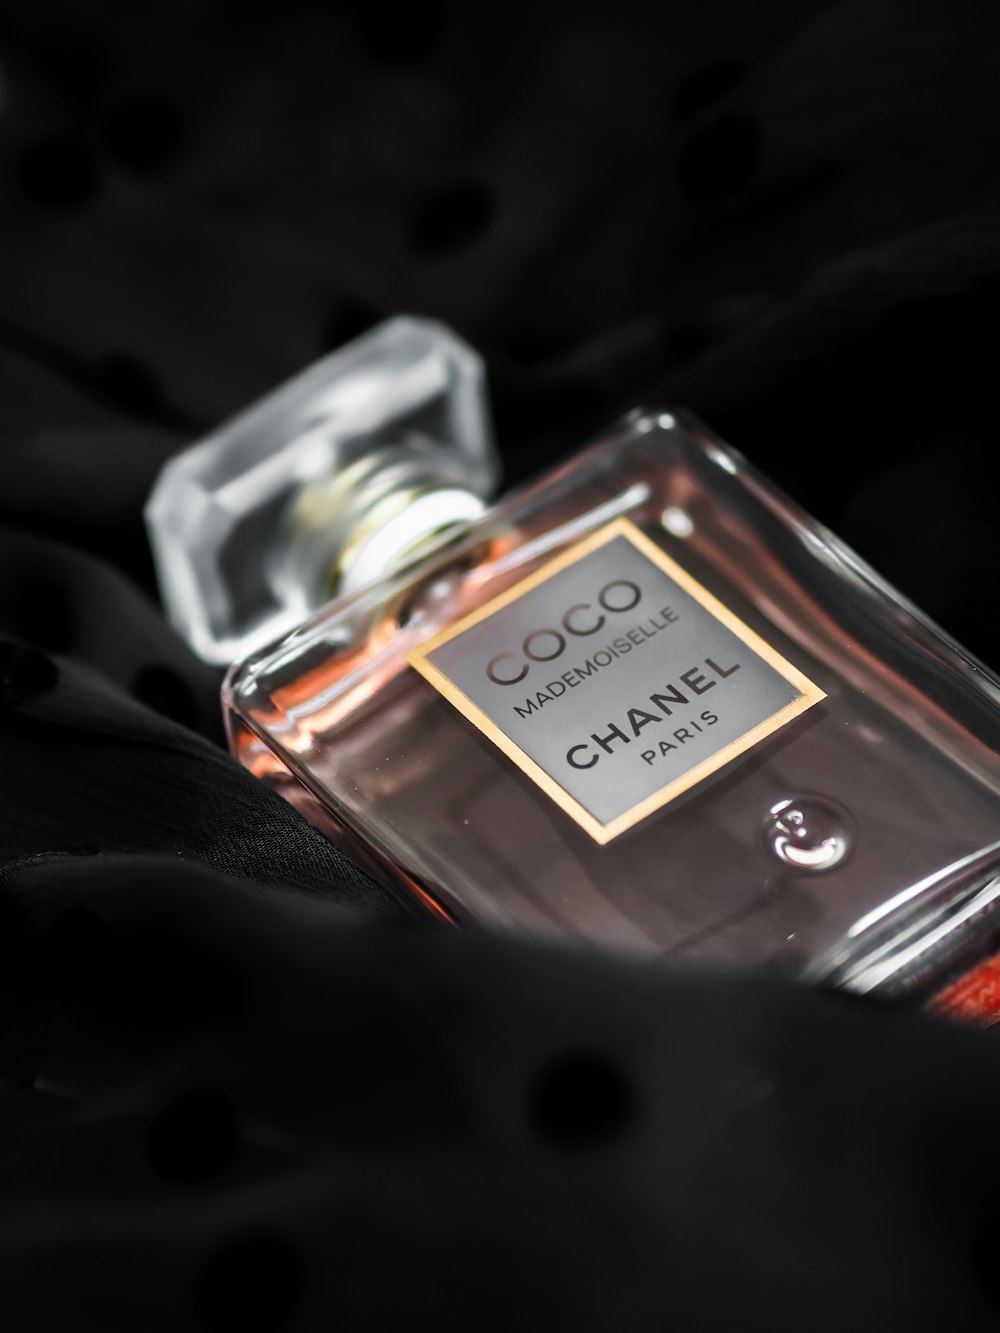 Frasco de perfume de 50 ml sobre tecido preto